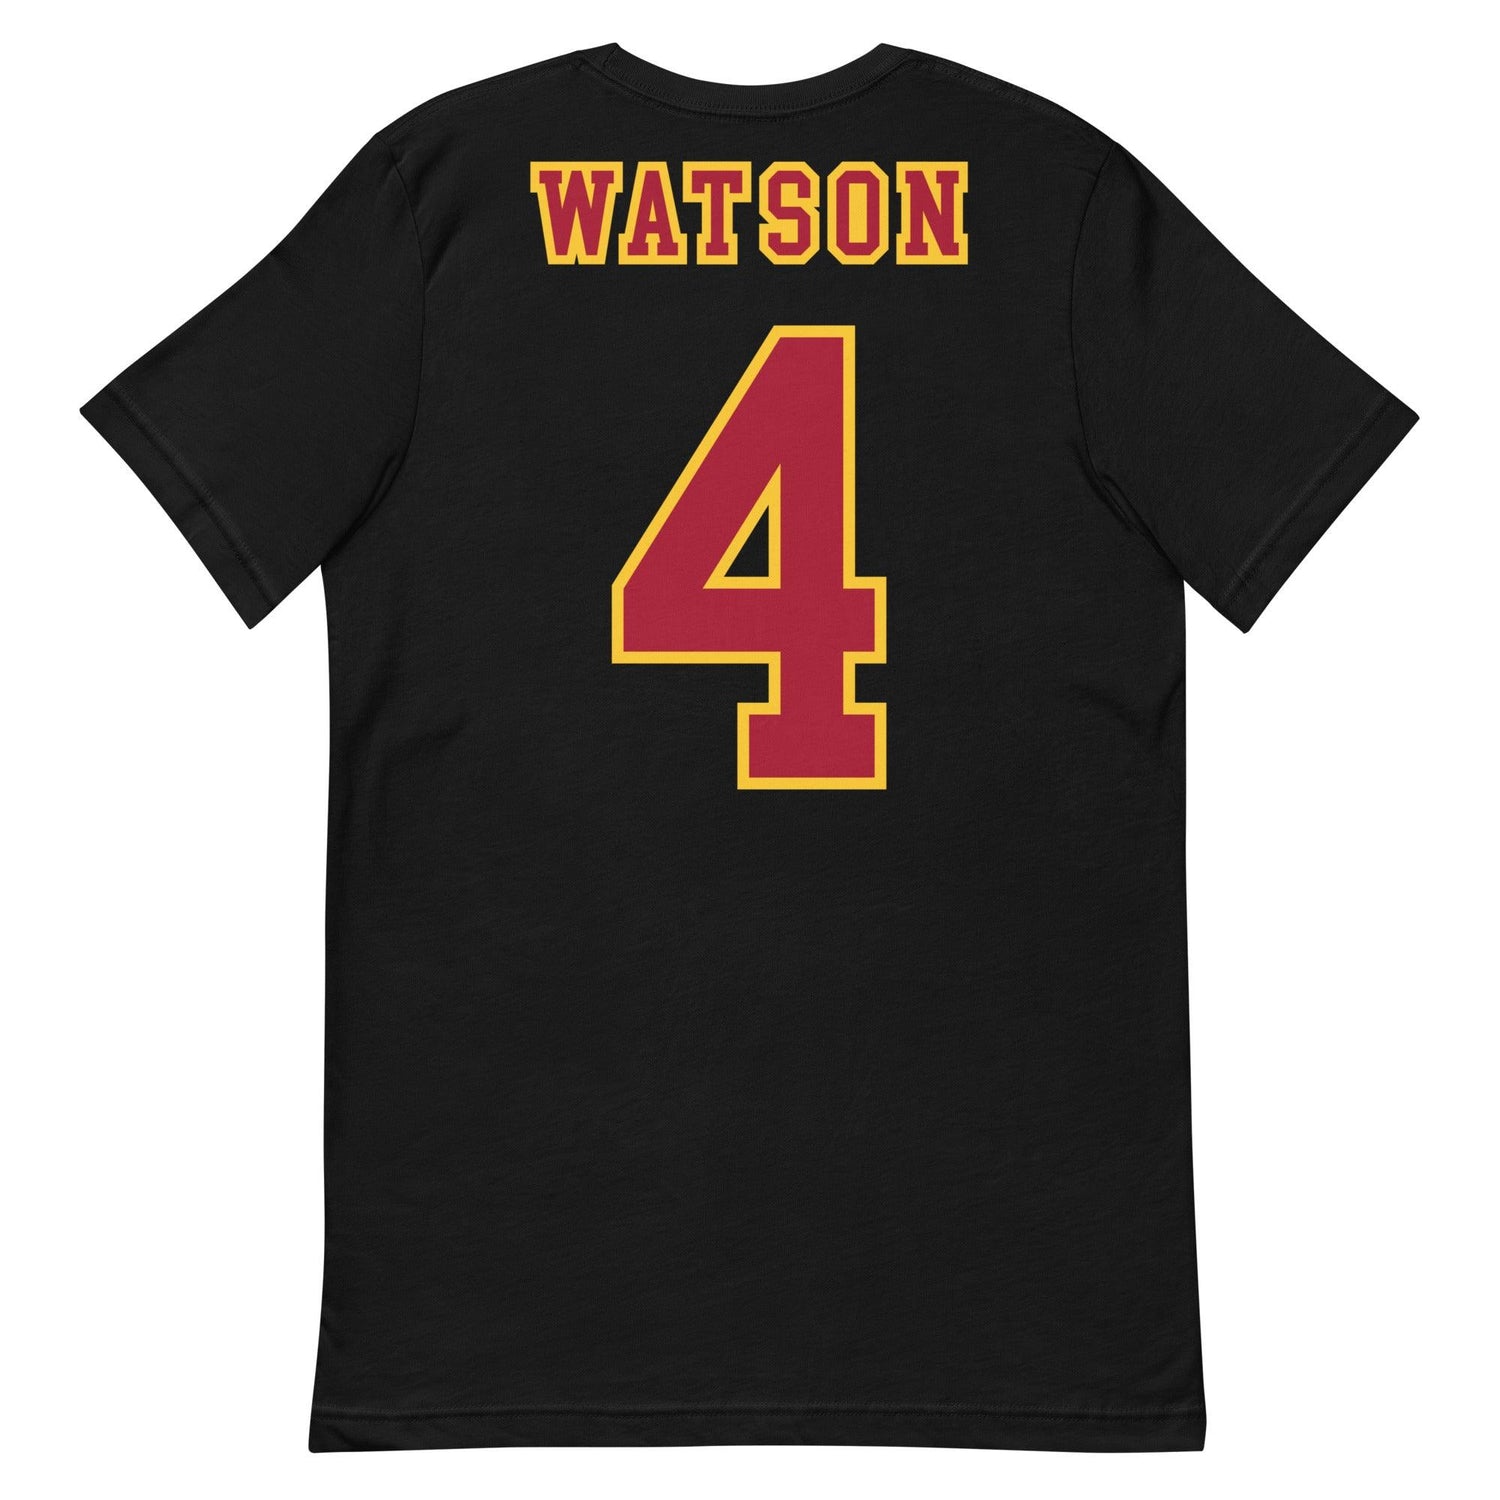 Demarion Watson "Jersey" t-shirt - Fan Arch